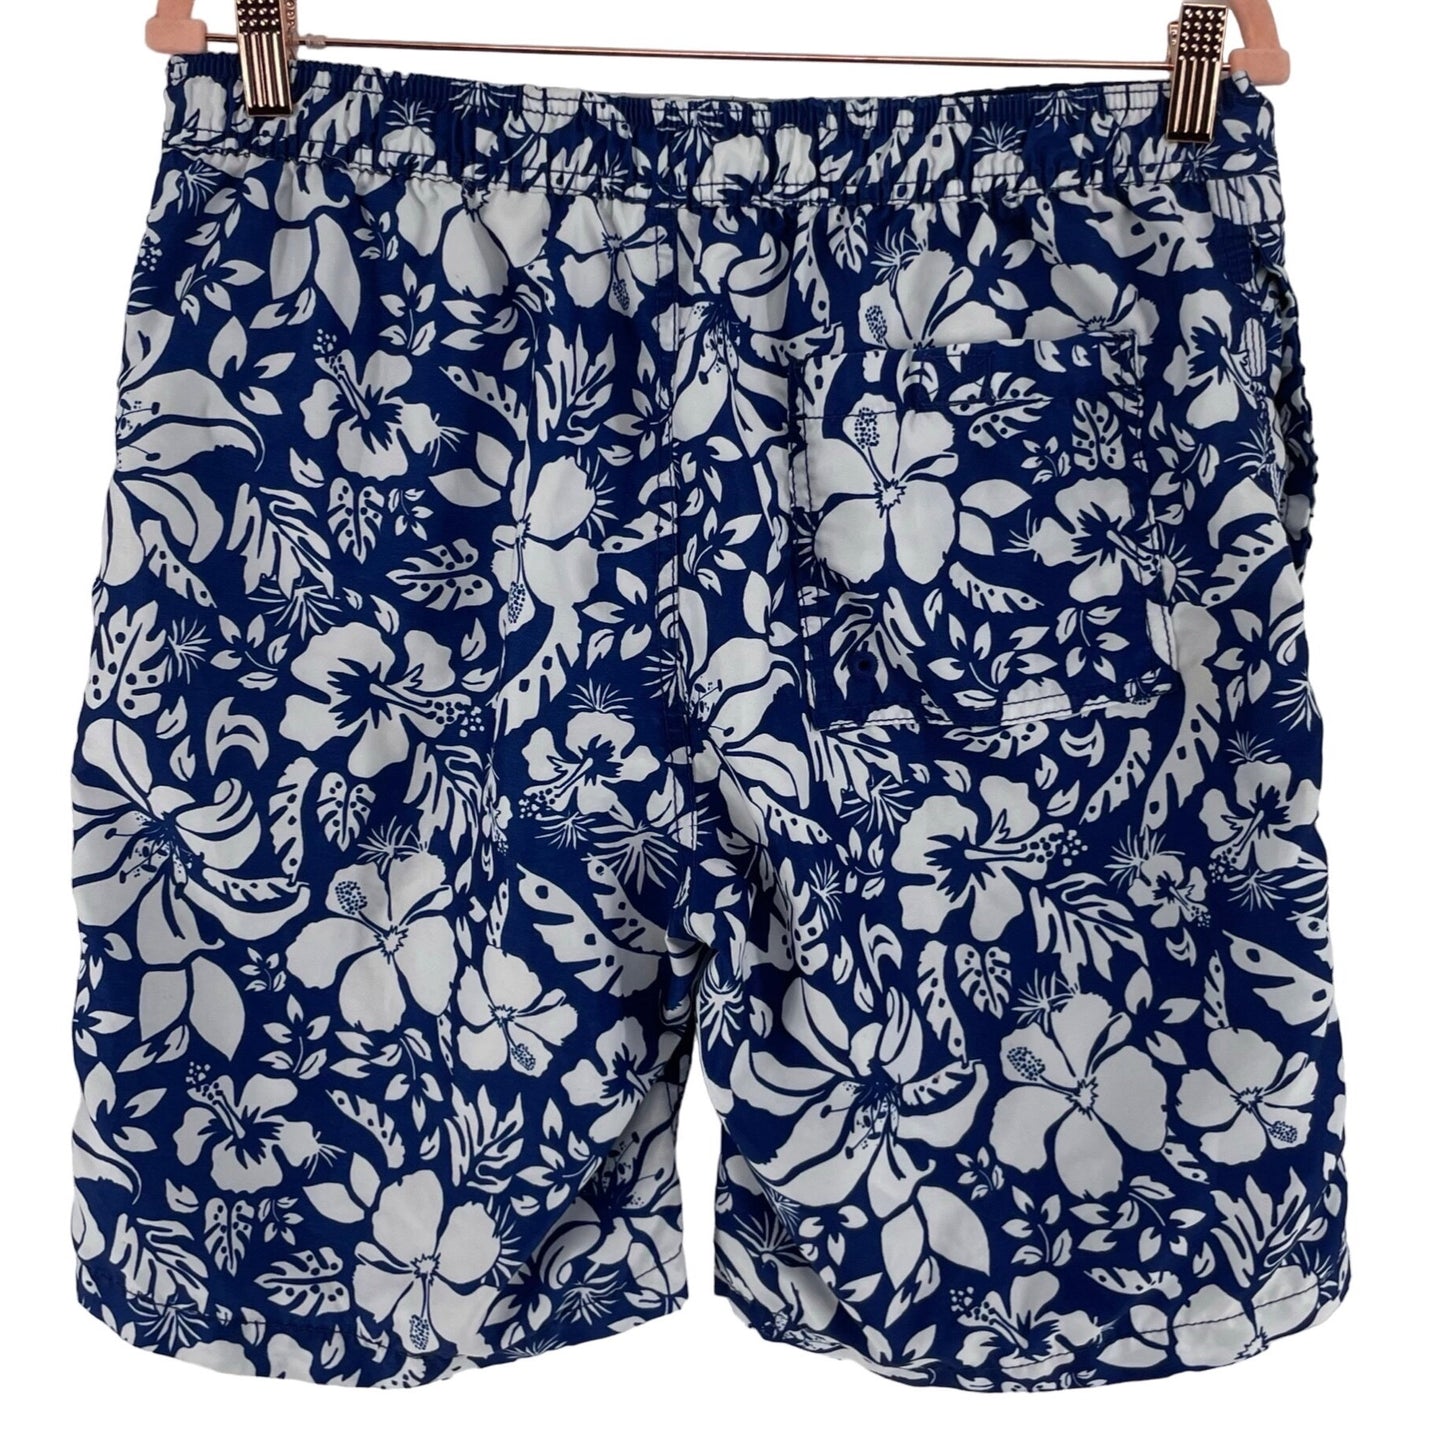 Merona Men's Size Medium Navy Blue & White Floral Swim Shorts